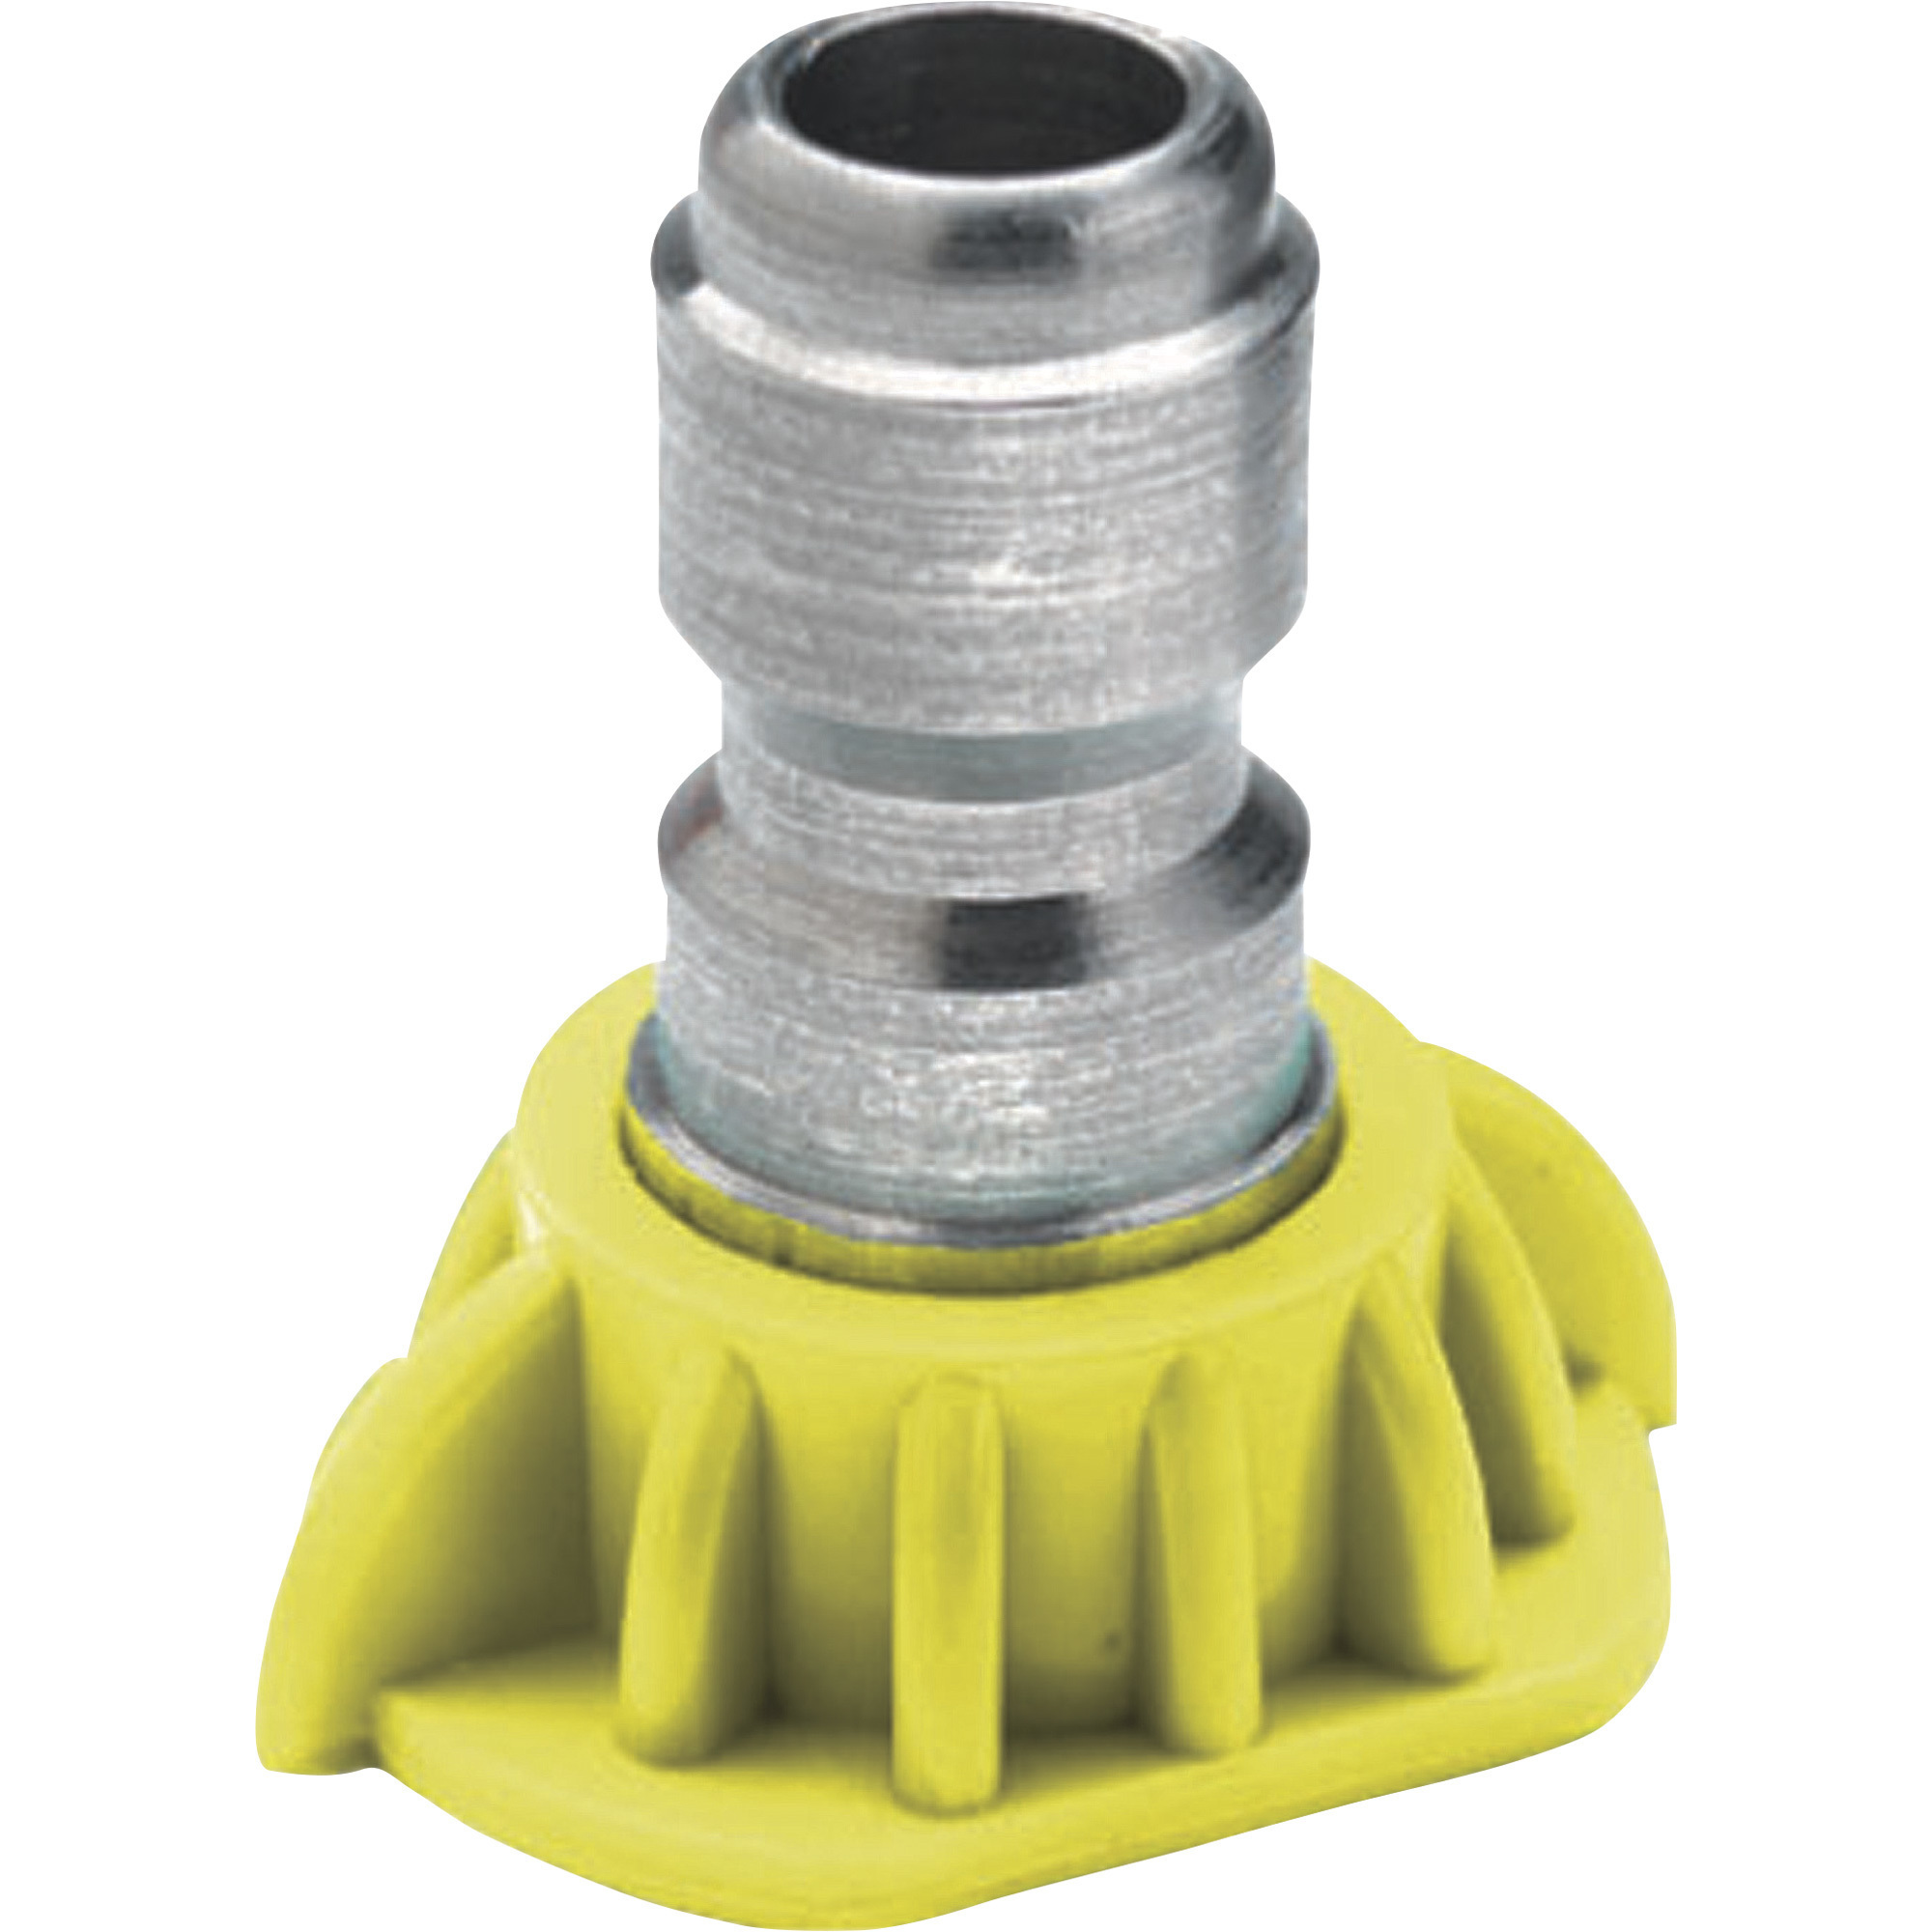 General Pump Pressure Washer Quick Couple Spray Nozzle â 5.5 Size, 15 Degree Spray, Model N15055QP